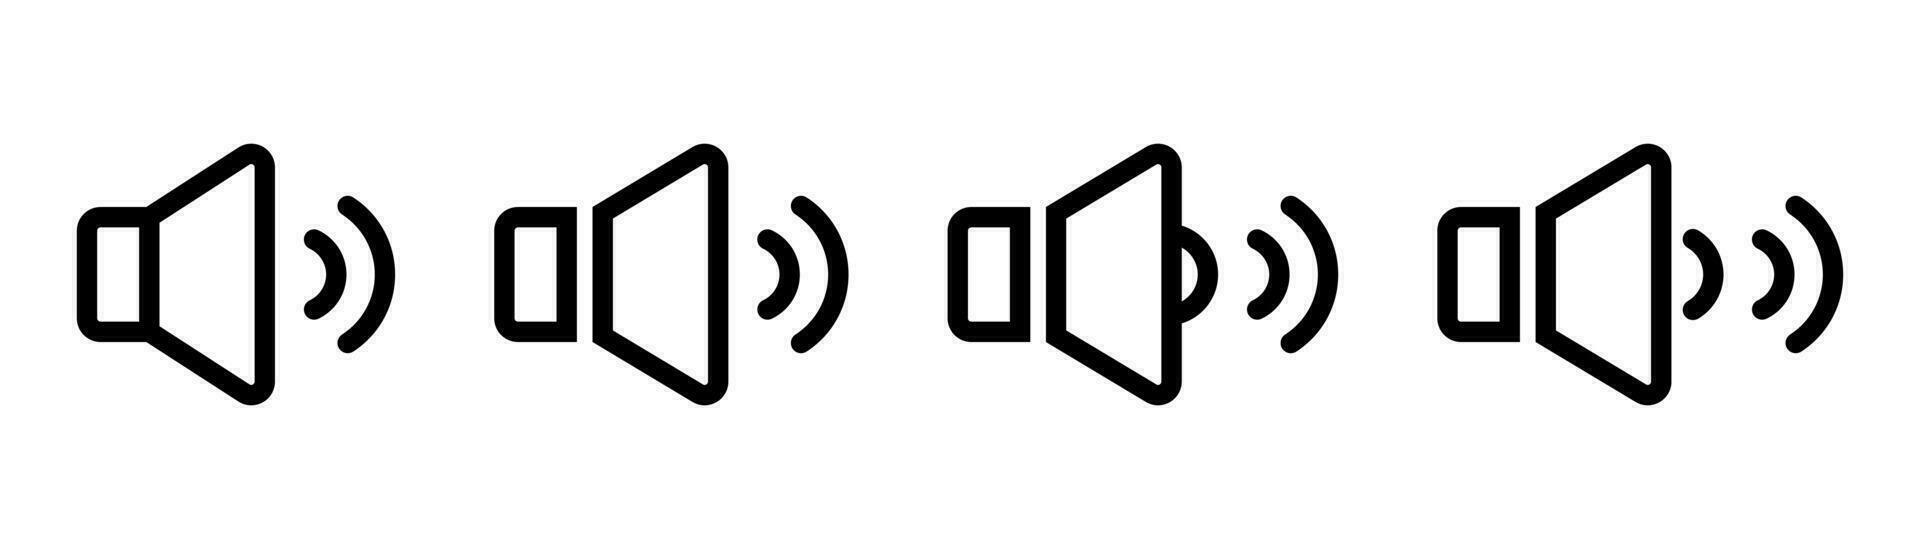 Volume icon set. Sound icon in line. Outline speaker sign in black. Volume symbol. Sound sign in line. Speaker icon set. Stock vector